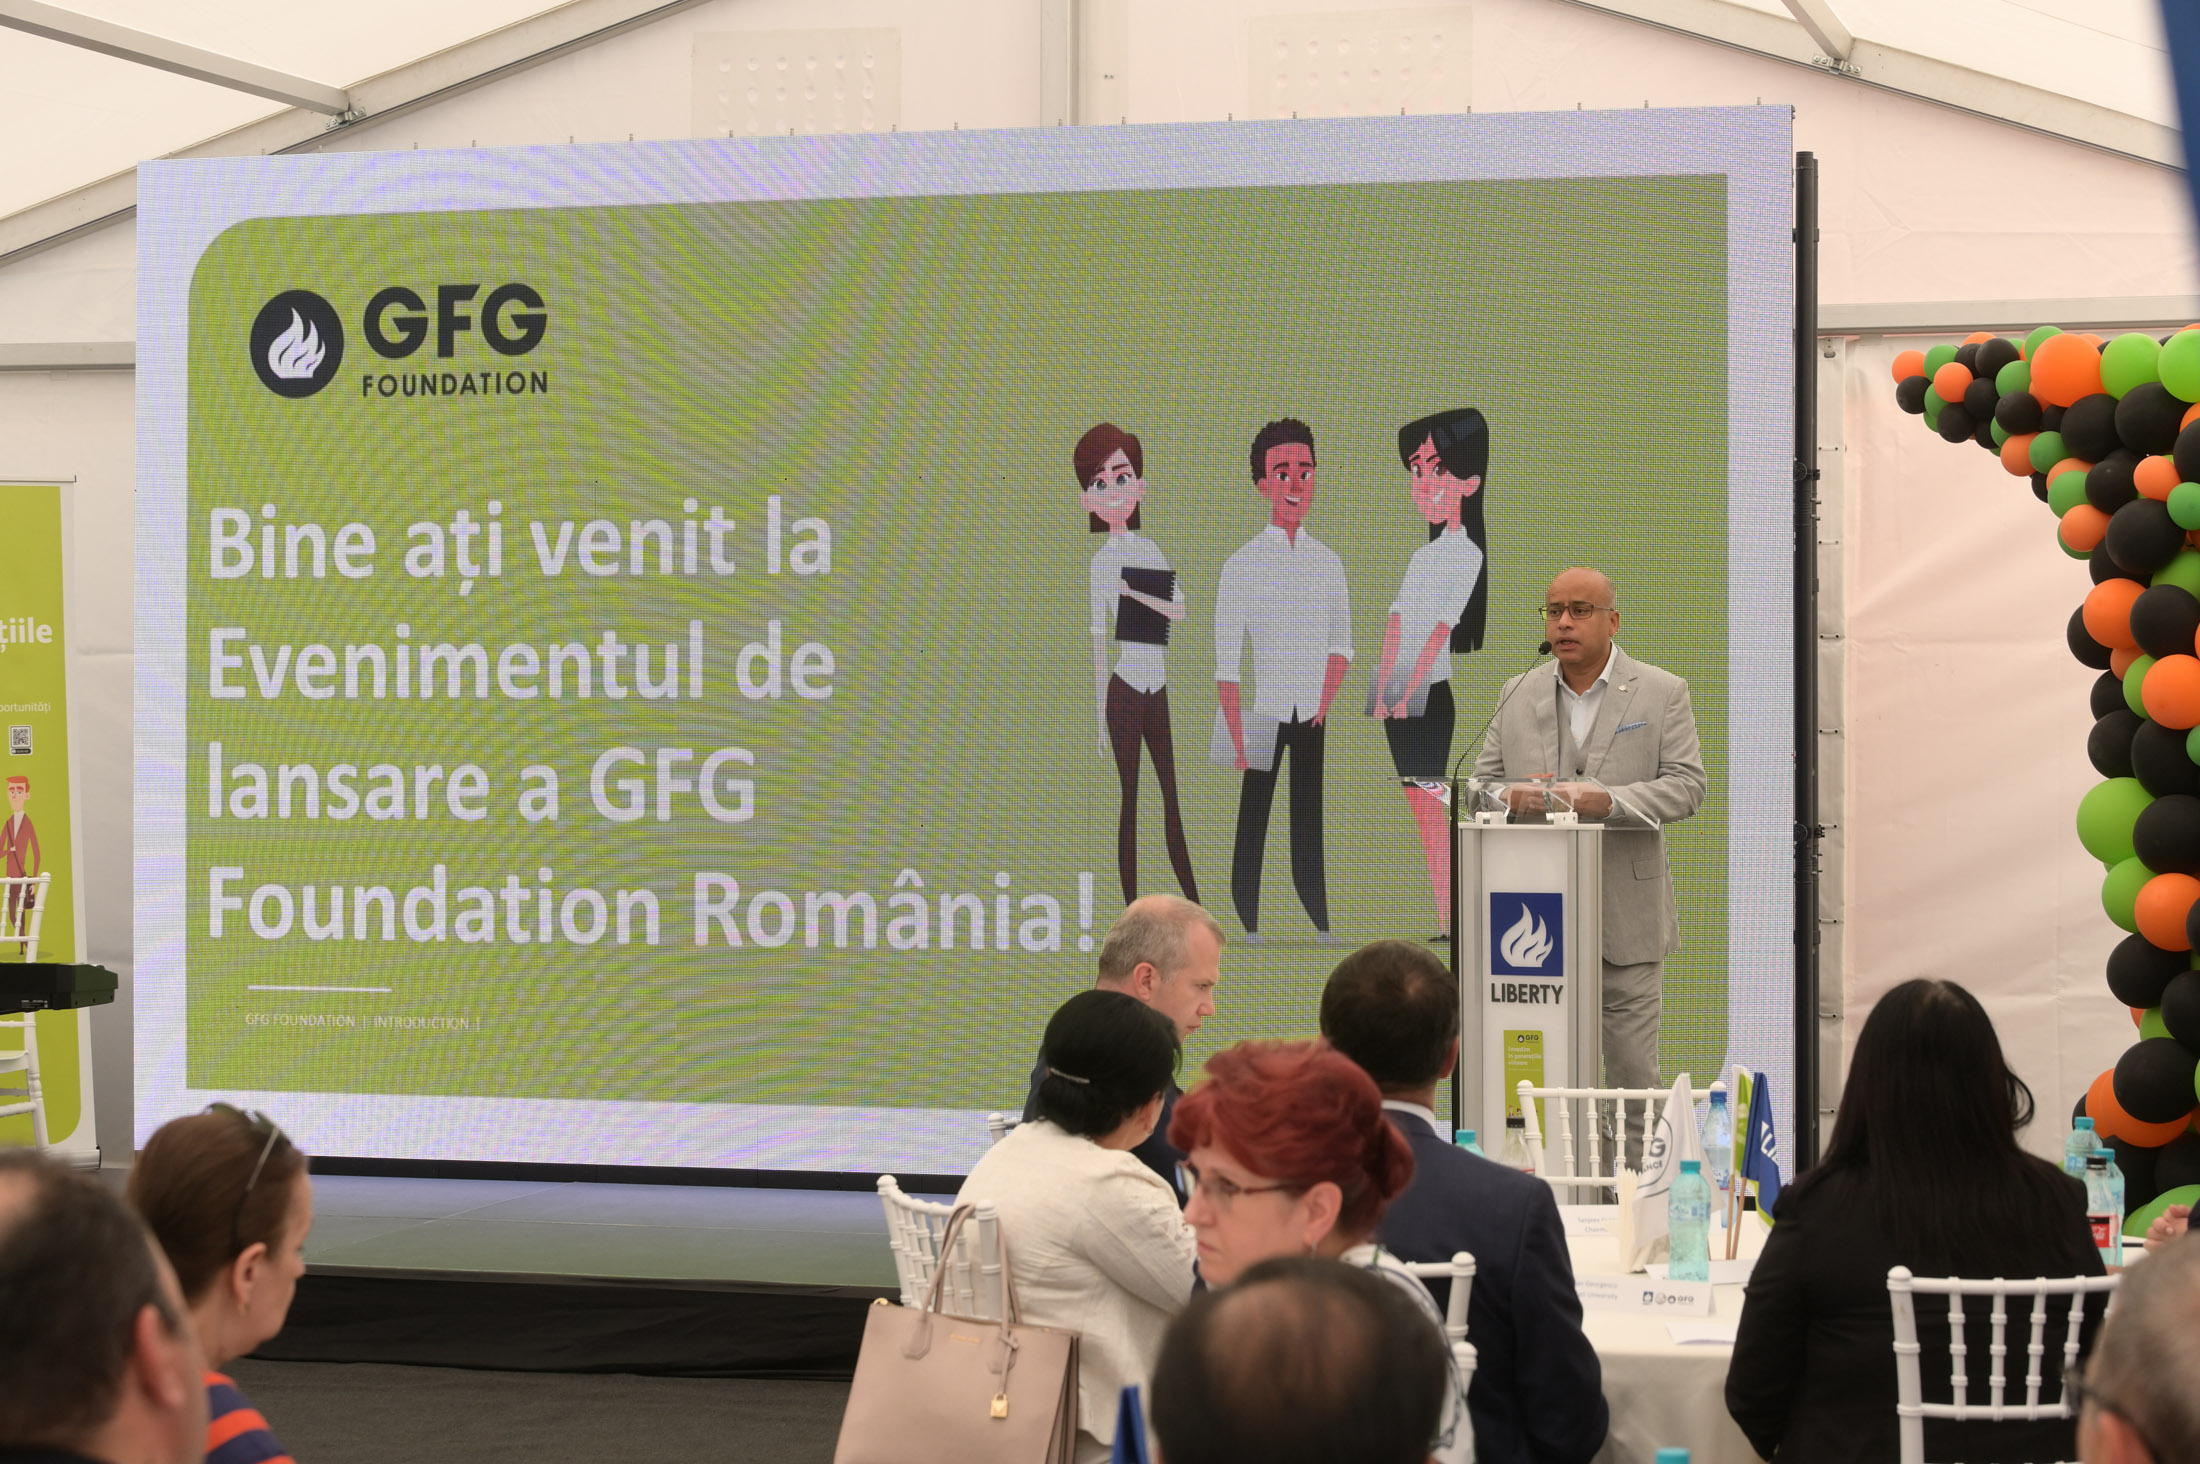 GFG 基金会扩展到罗马尼亚